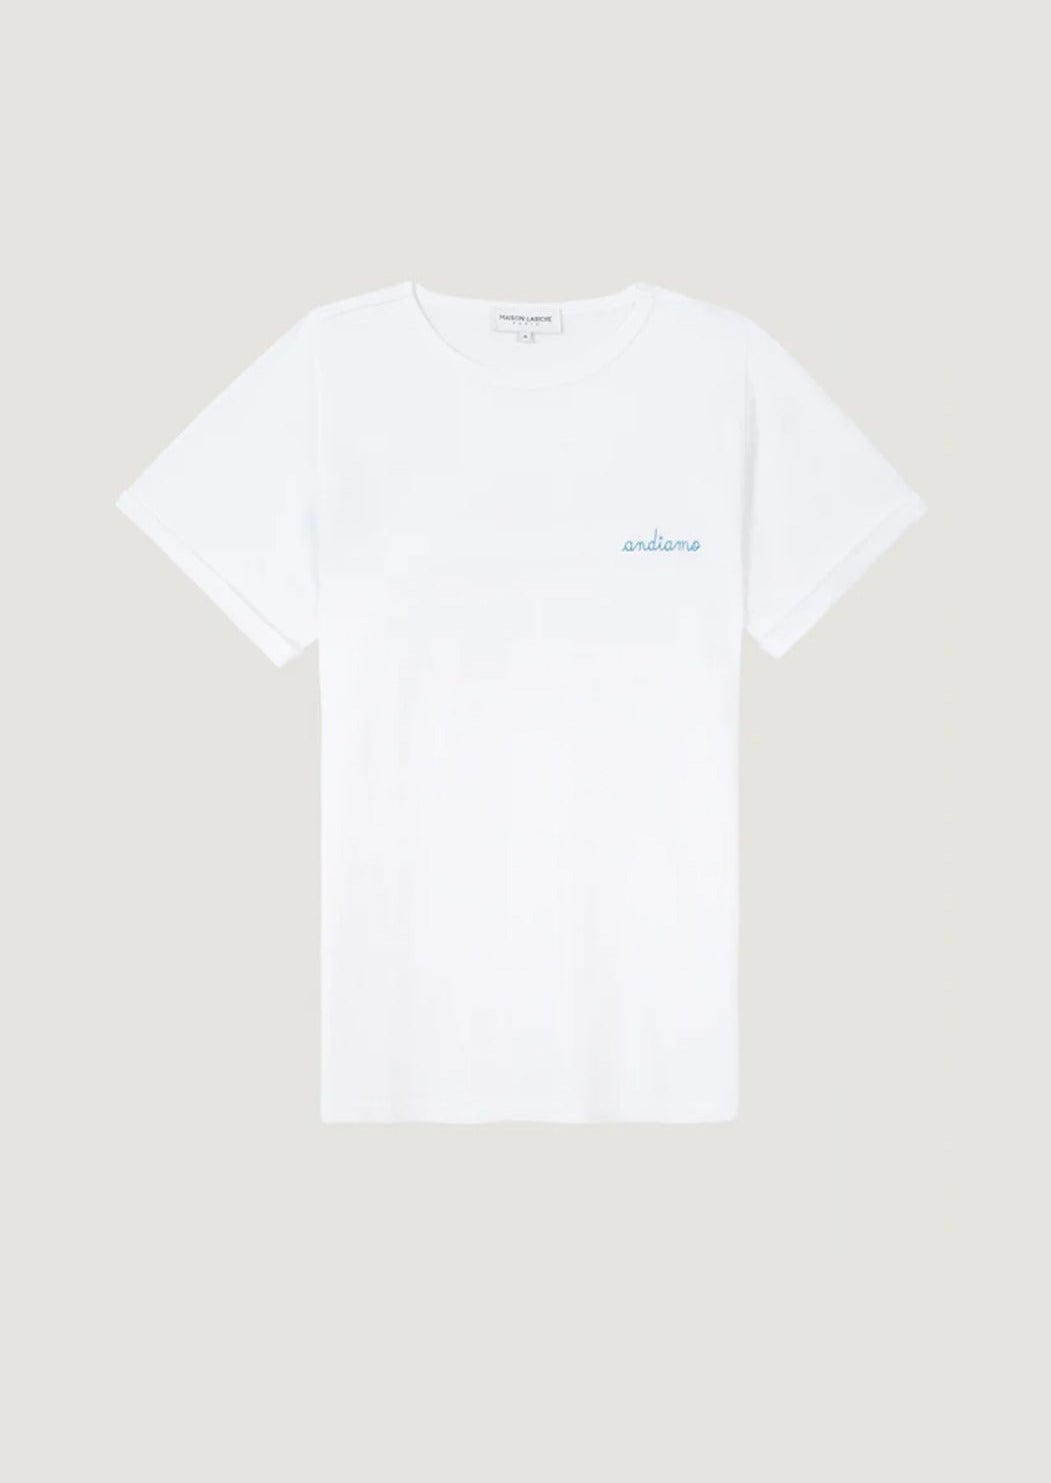 MAISON LABICHE Polo/T-shirt White / S T-shirt Maison Labiche - Poitou